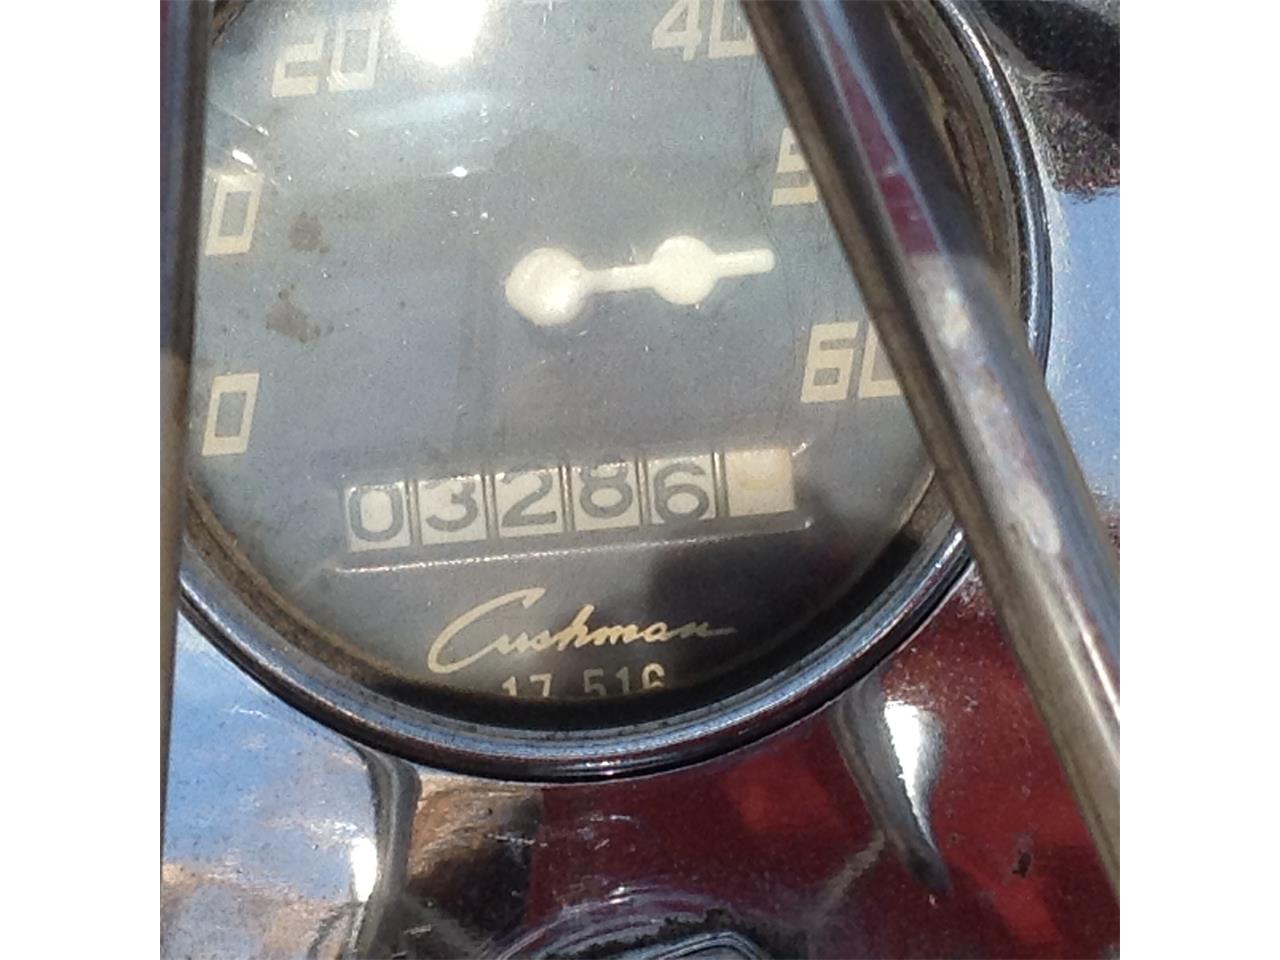 1963 Cushman Motorcycle for sale in Arundel, ME – photo 4